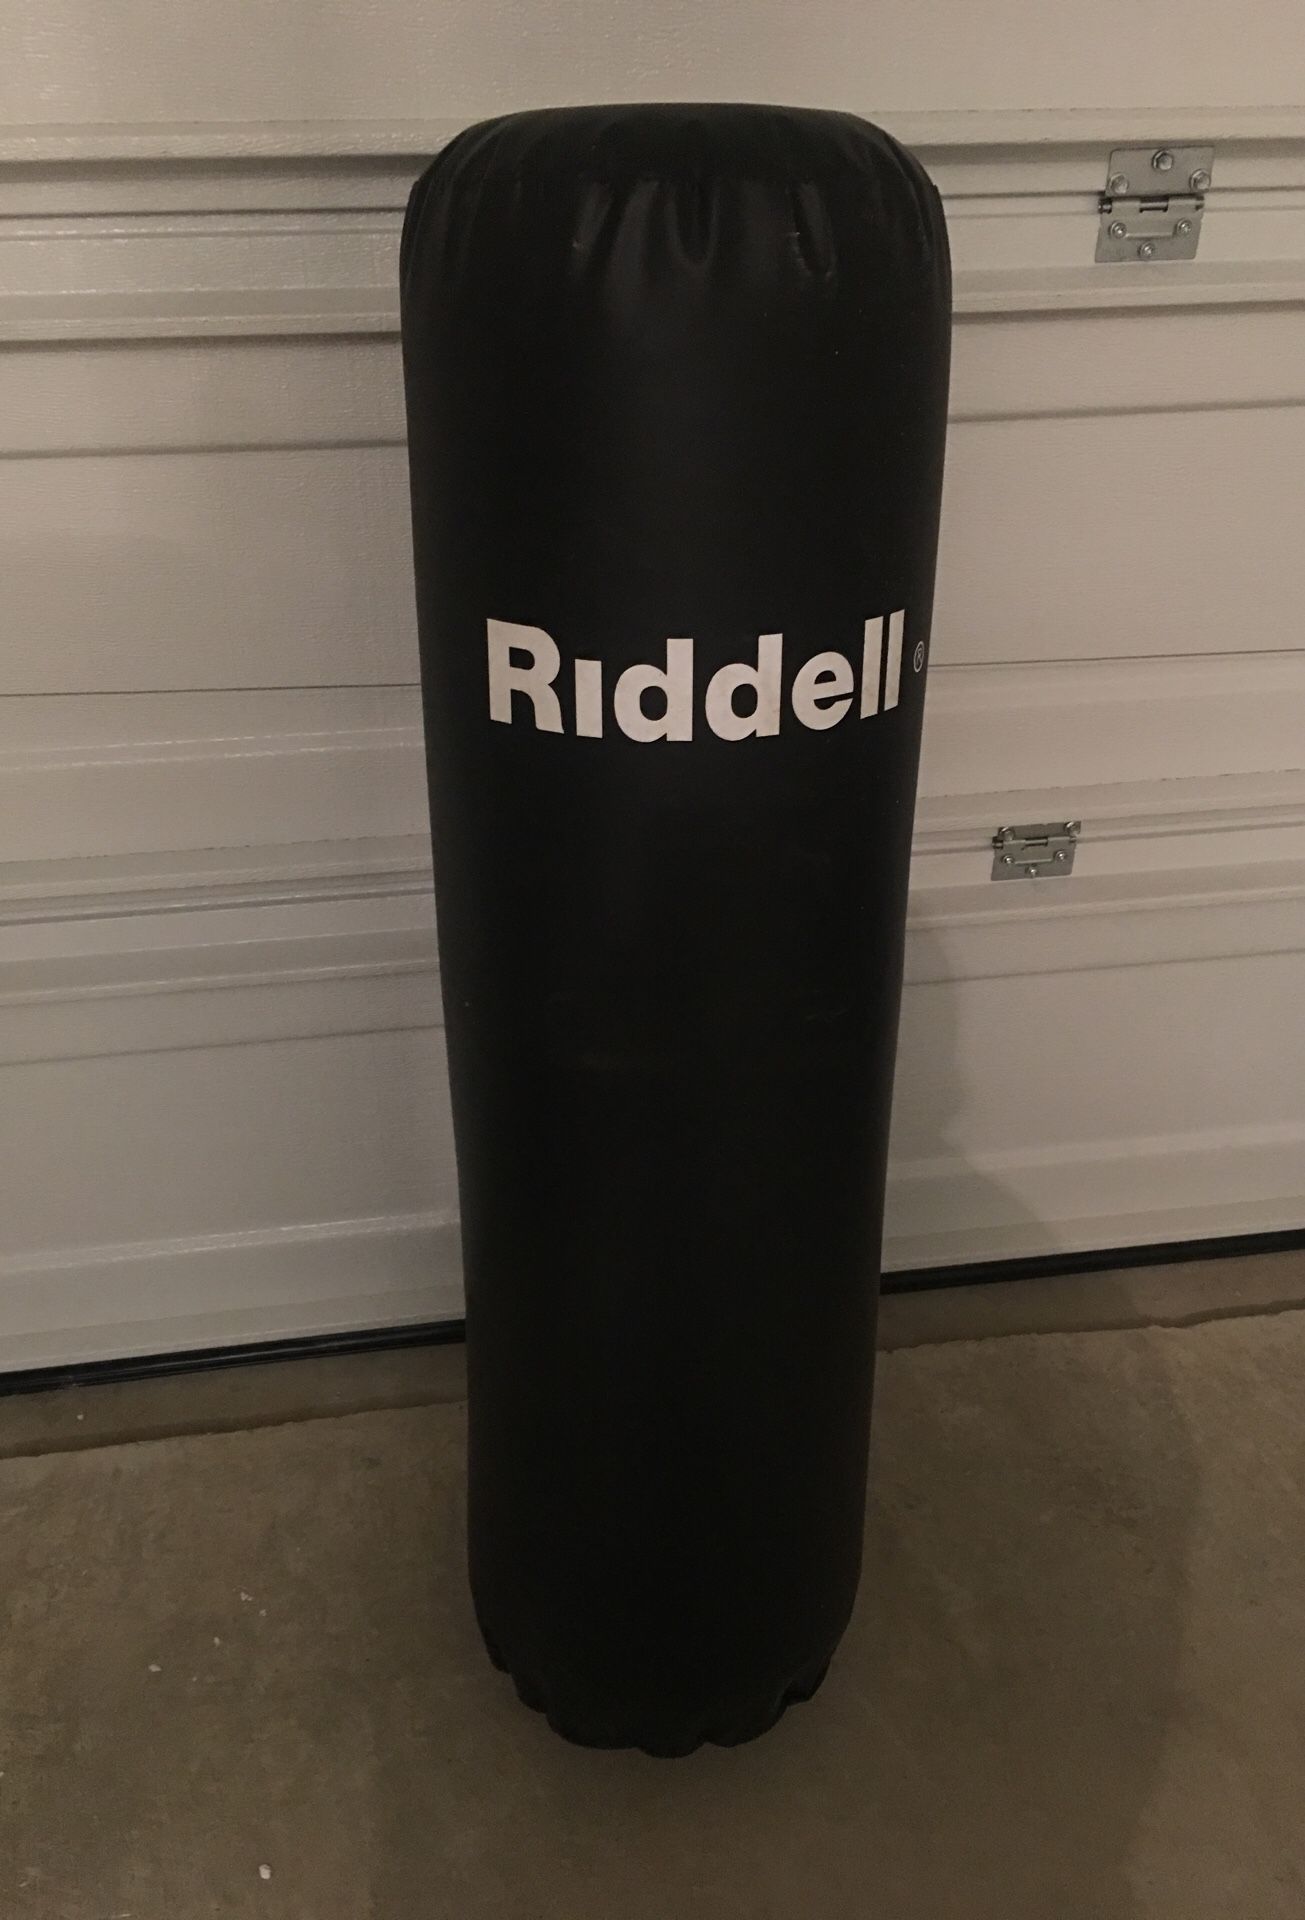 Riddell punching bag